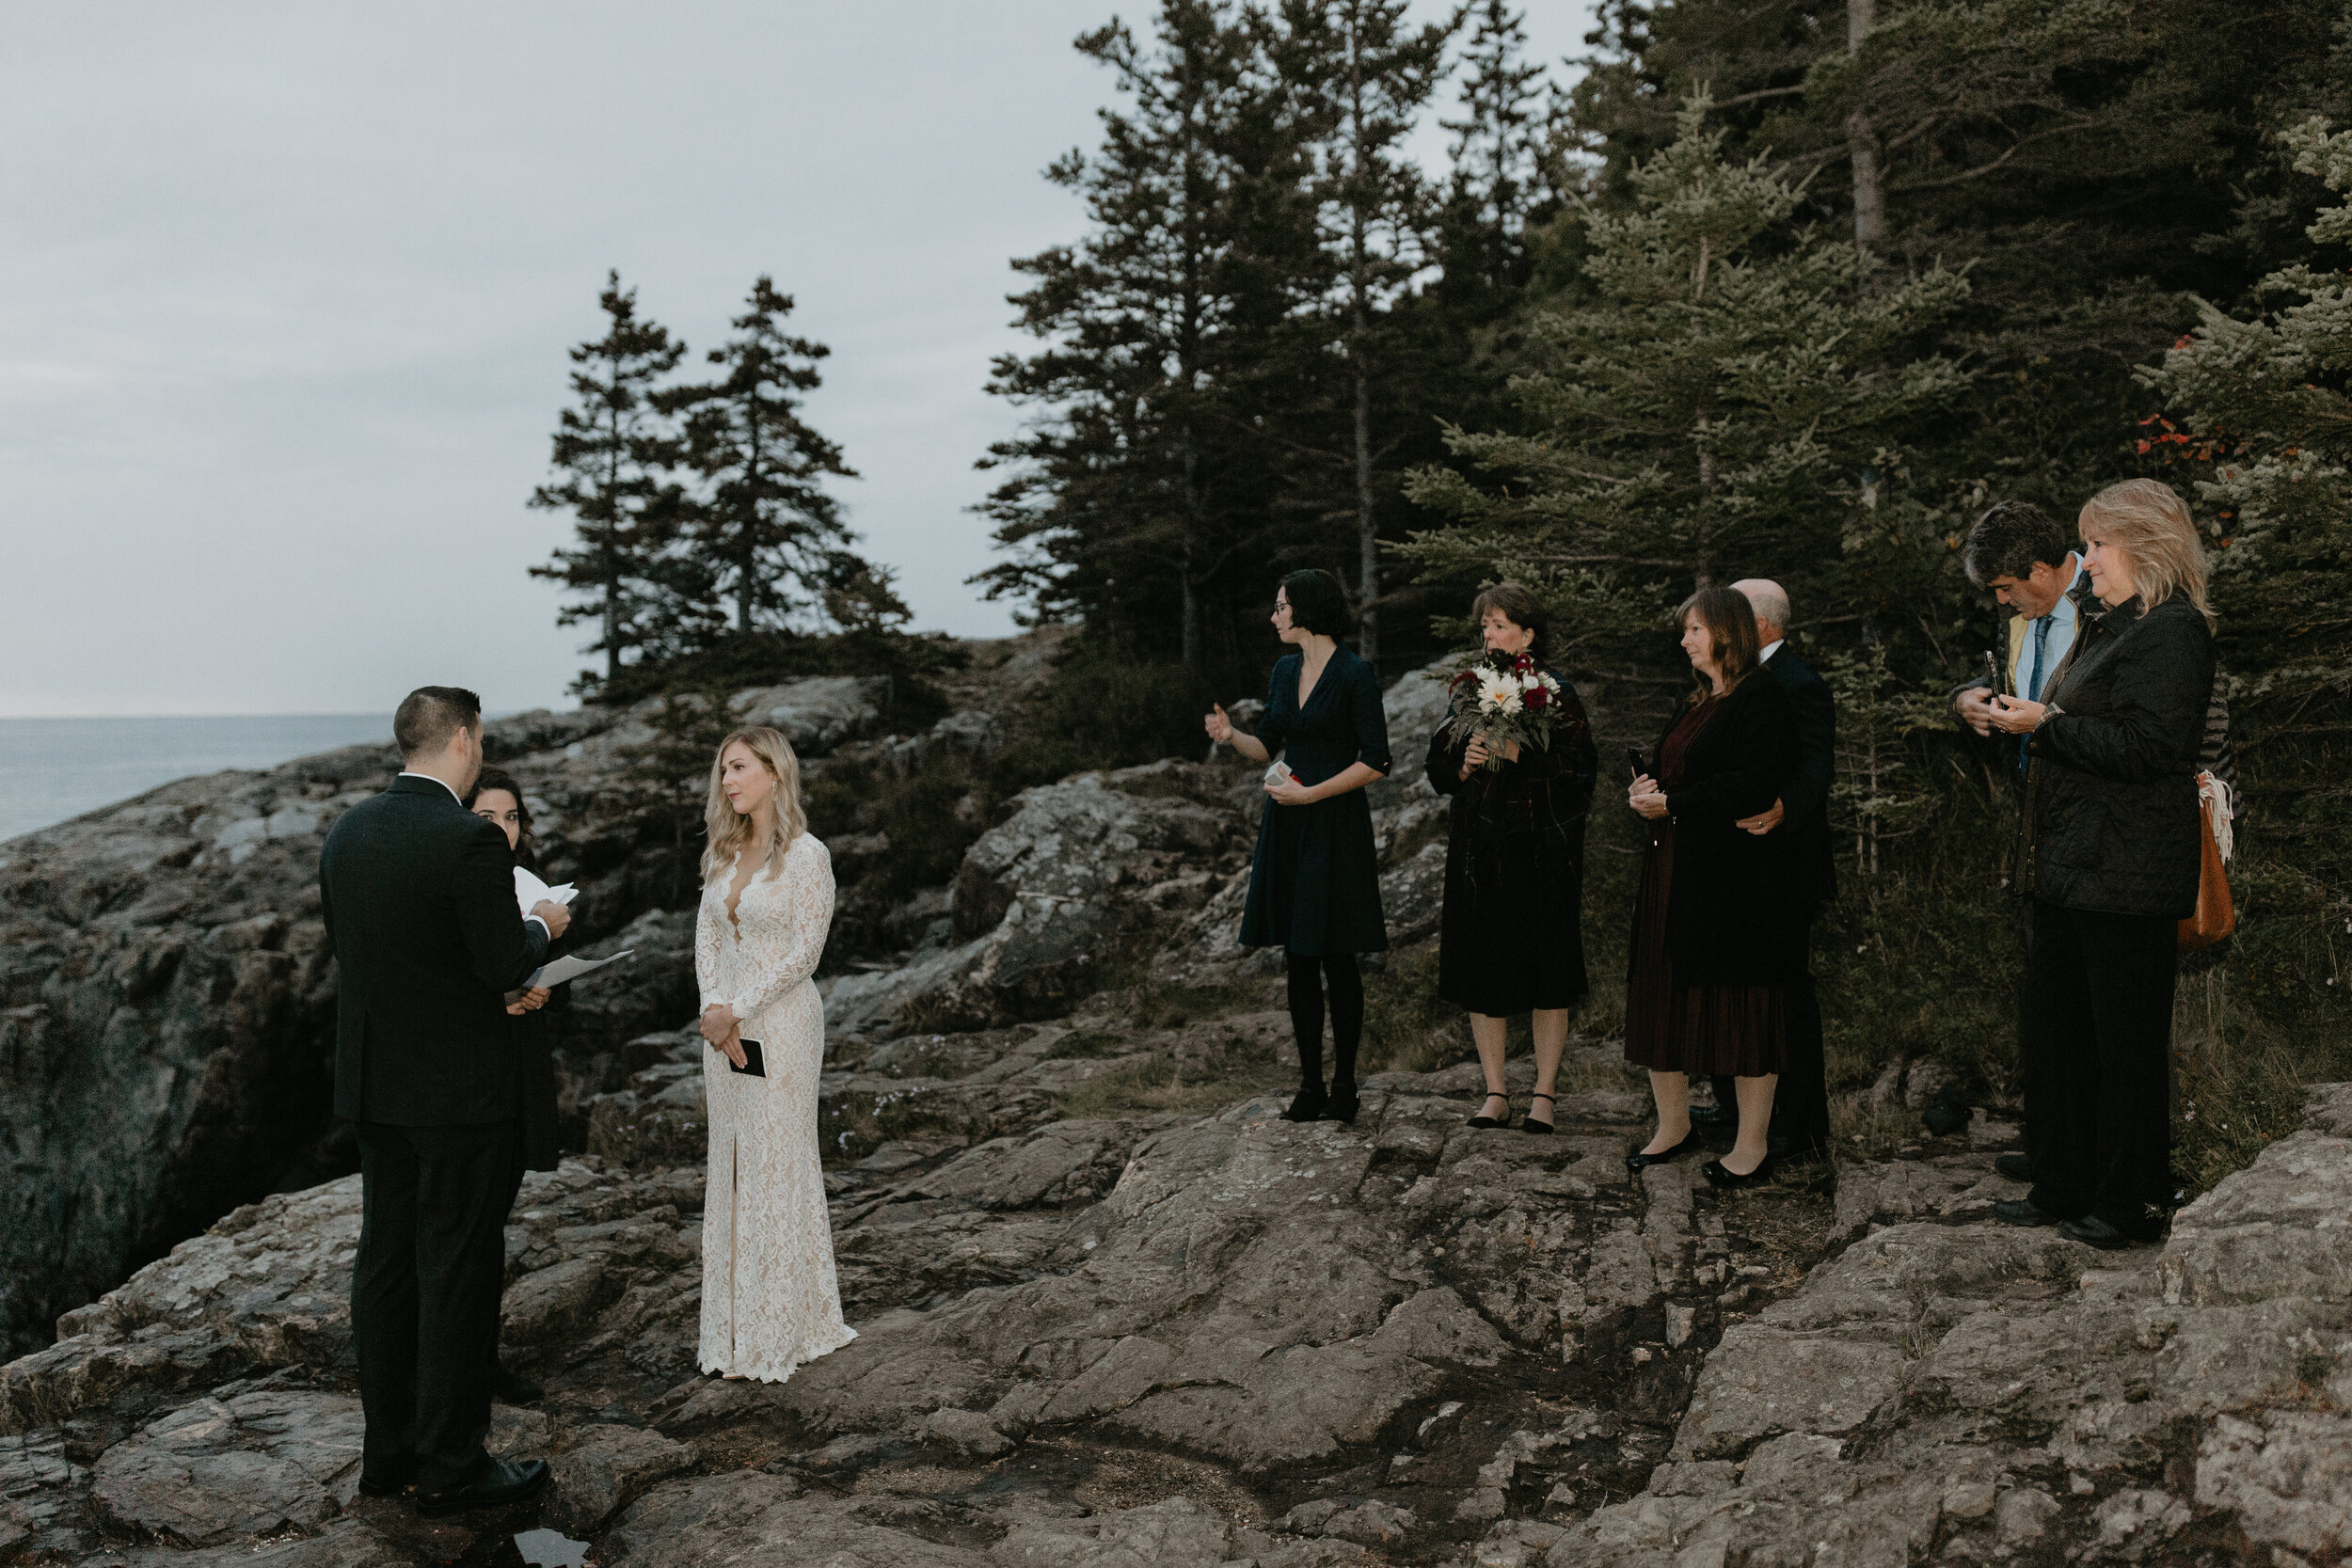 Nicole-Daacke-Photography-Acadia-national-park-elopement-photography-elopement-in-acadia-inspiration-maine-intimate-wedding-destination-elopement-photographer-rainy-day-maine-coast-bar-harbor-elopement-photography-111.jpg